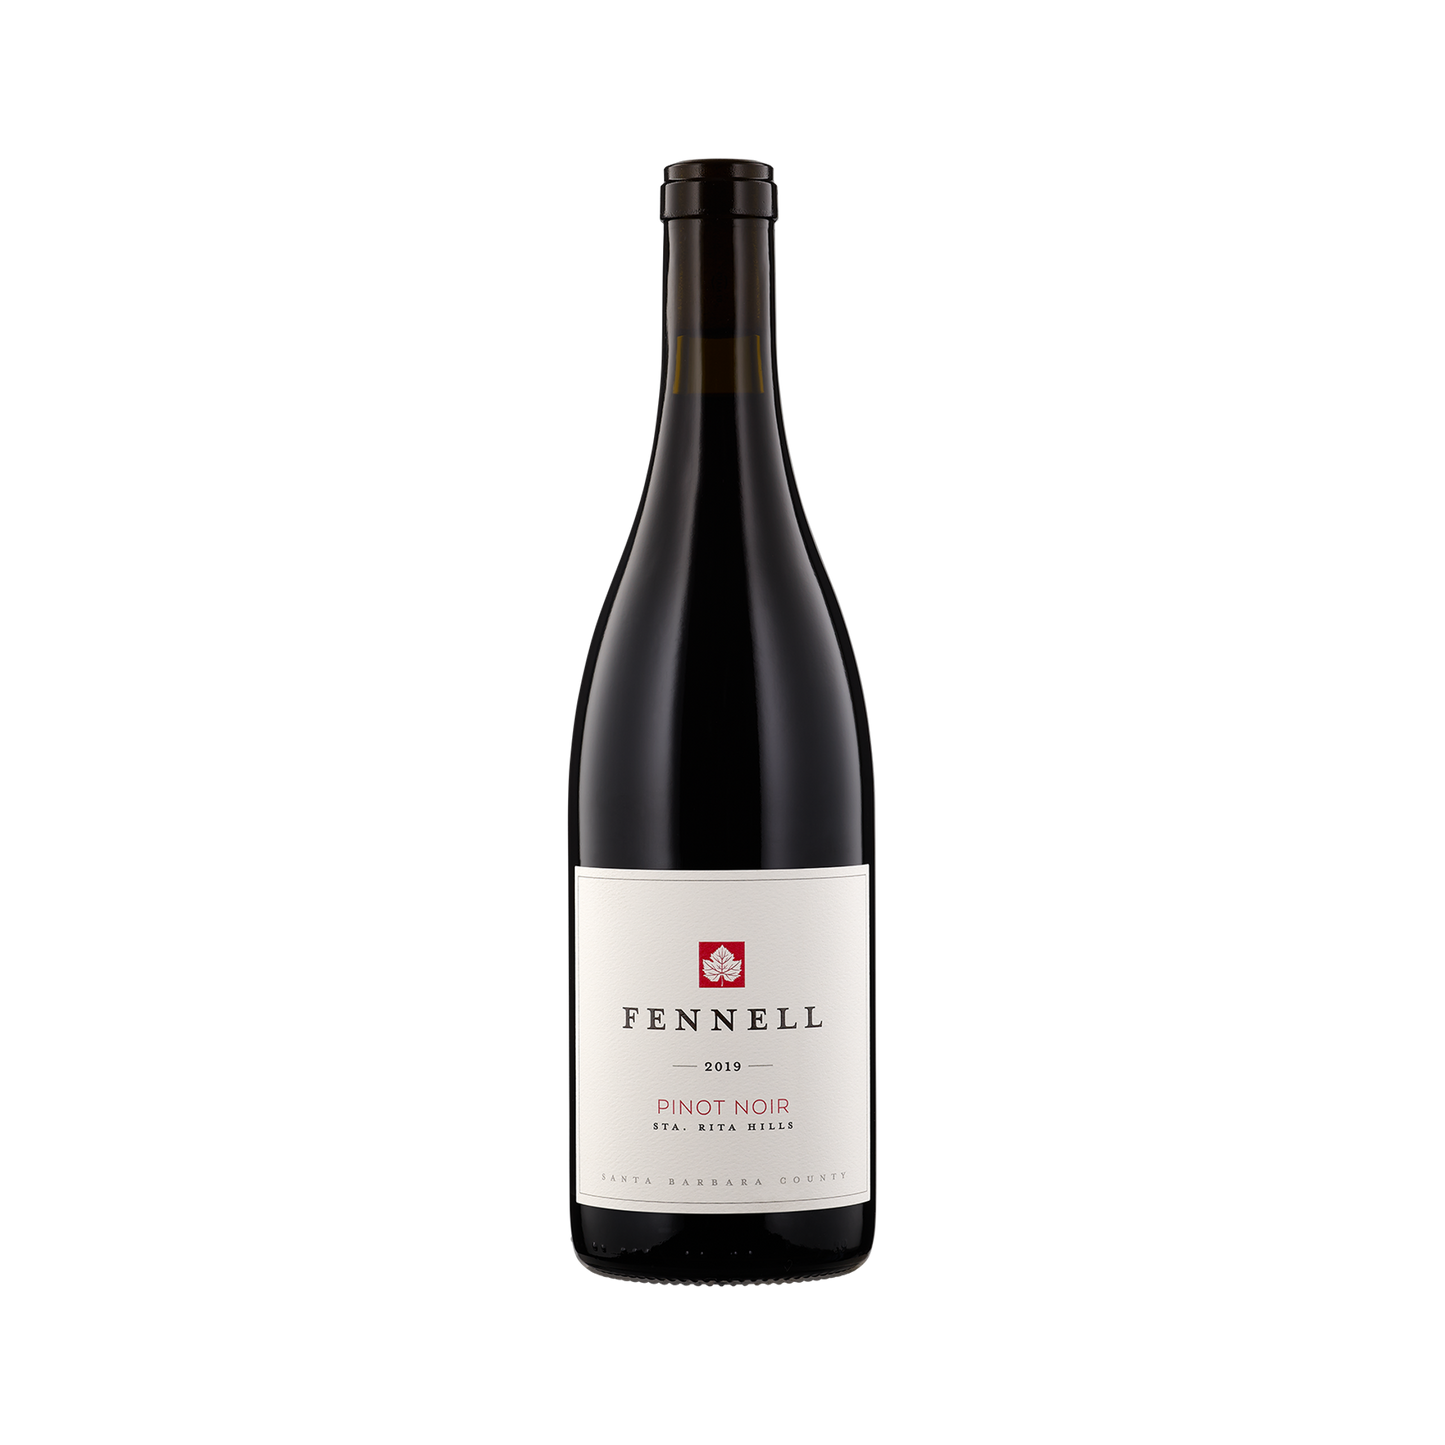 A bottle of Fennell 2019 Pinot Noir